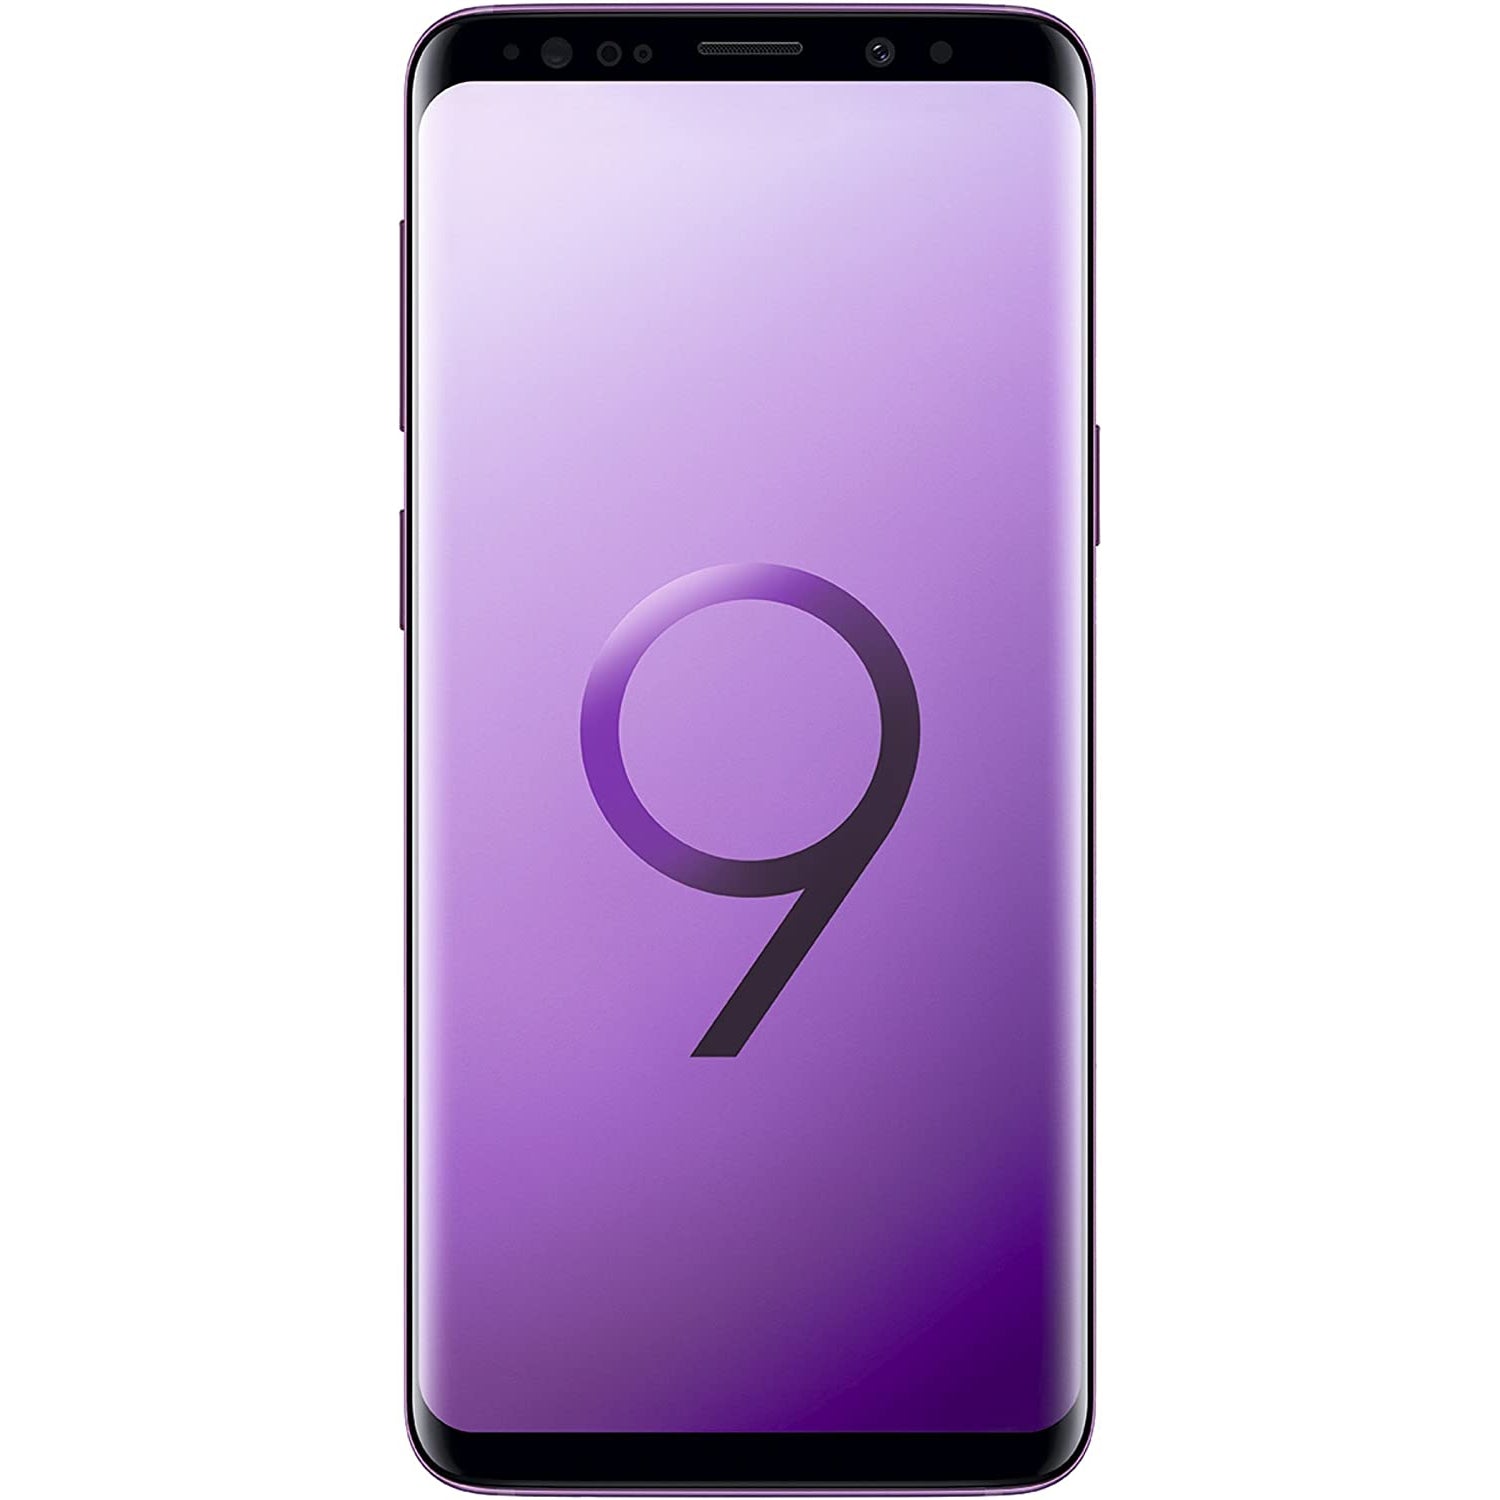 Samsung Galaxy S9 64GB Midnight Black, Lilac Purple, Coral Blue or Titanium Grey Unlocked - Good Condition